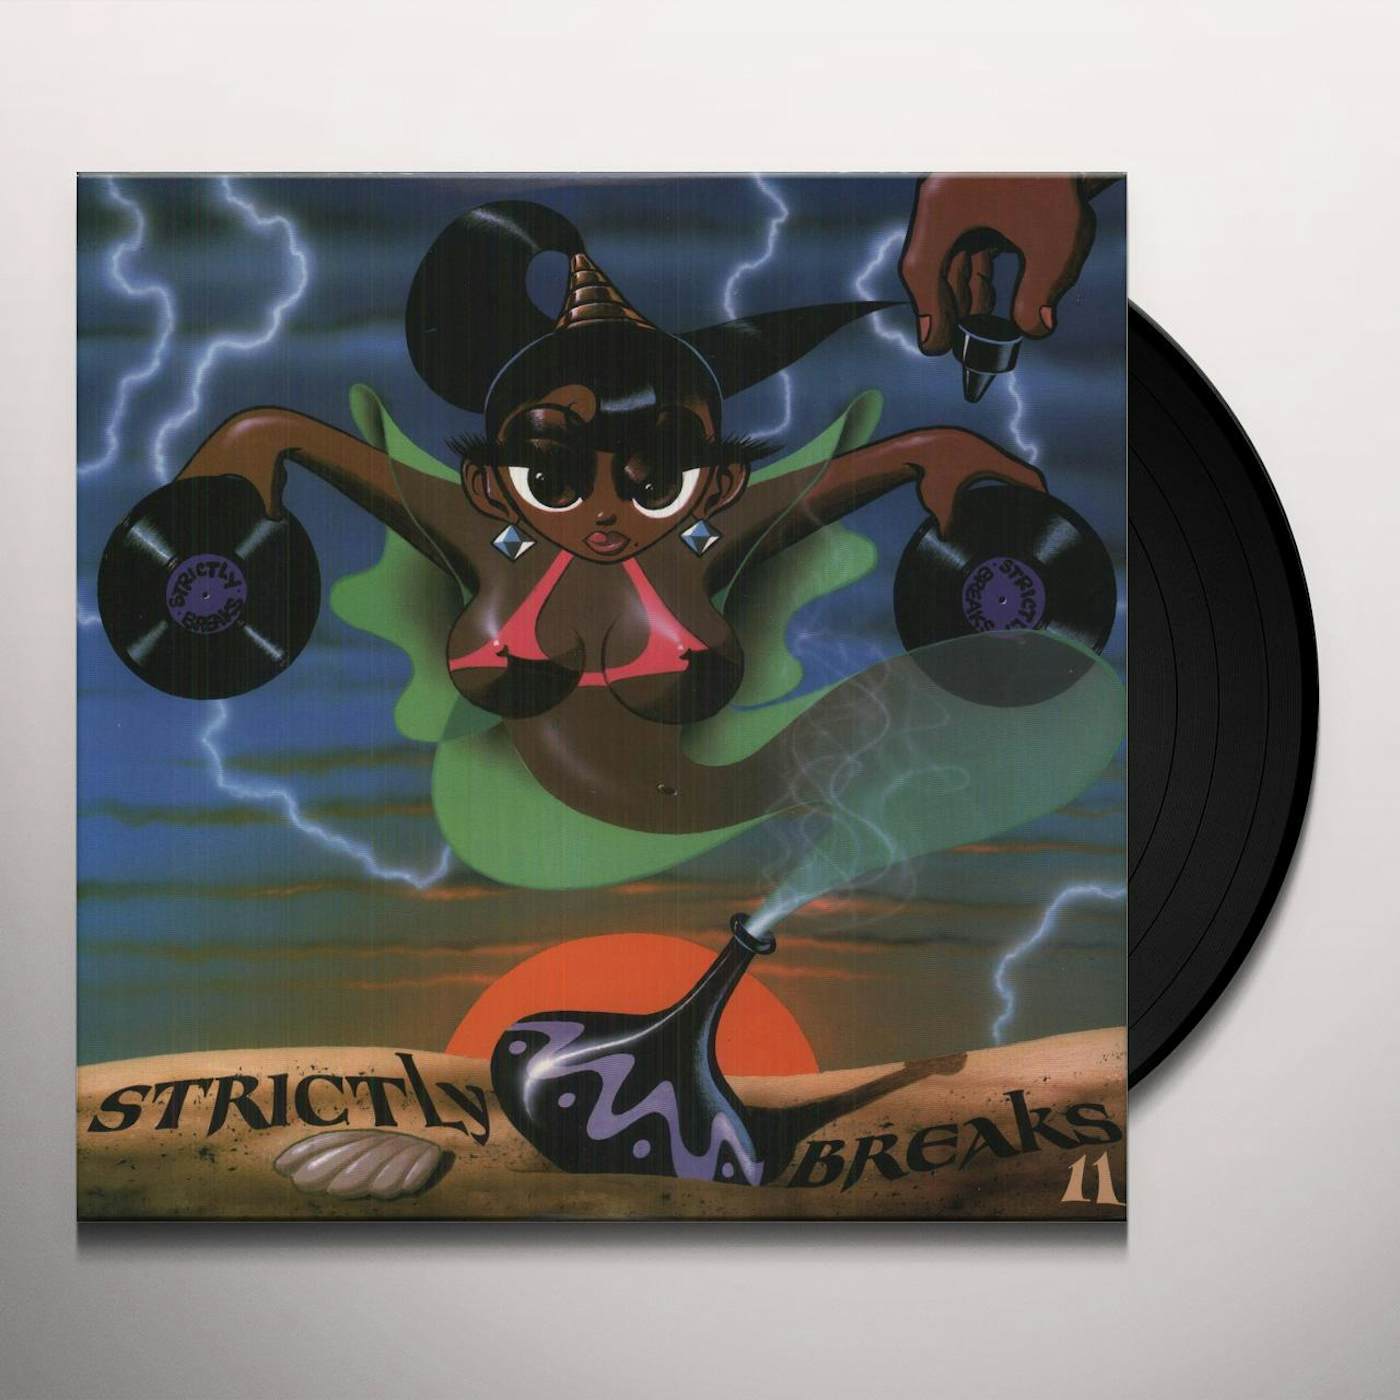 STRICTLY BREAKS 11 Vinyl Record